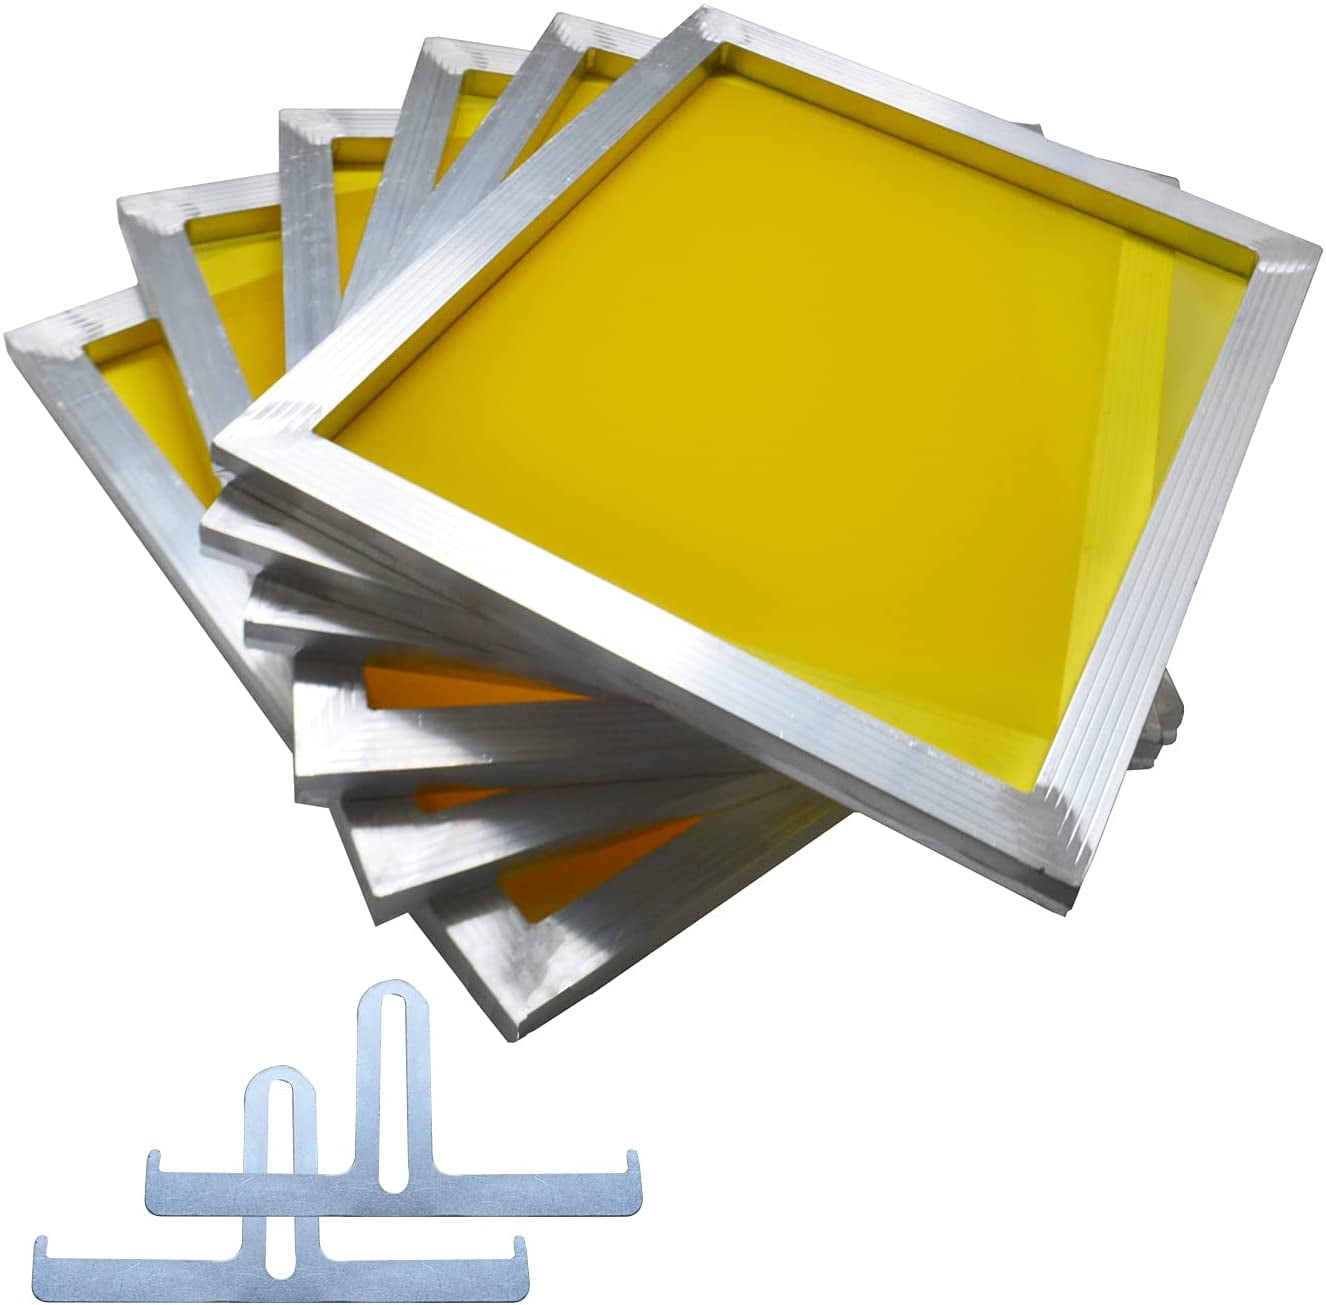 NEW 20"x24" Aluminum Frame Screen Printing Screens 200 tpi Yellow Mesh 12 pcs